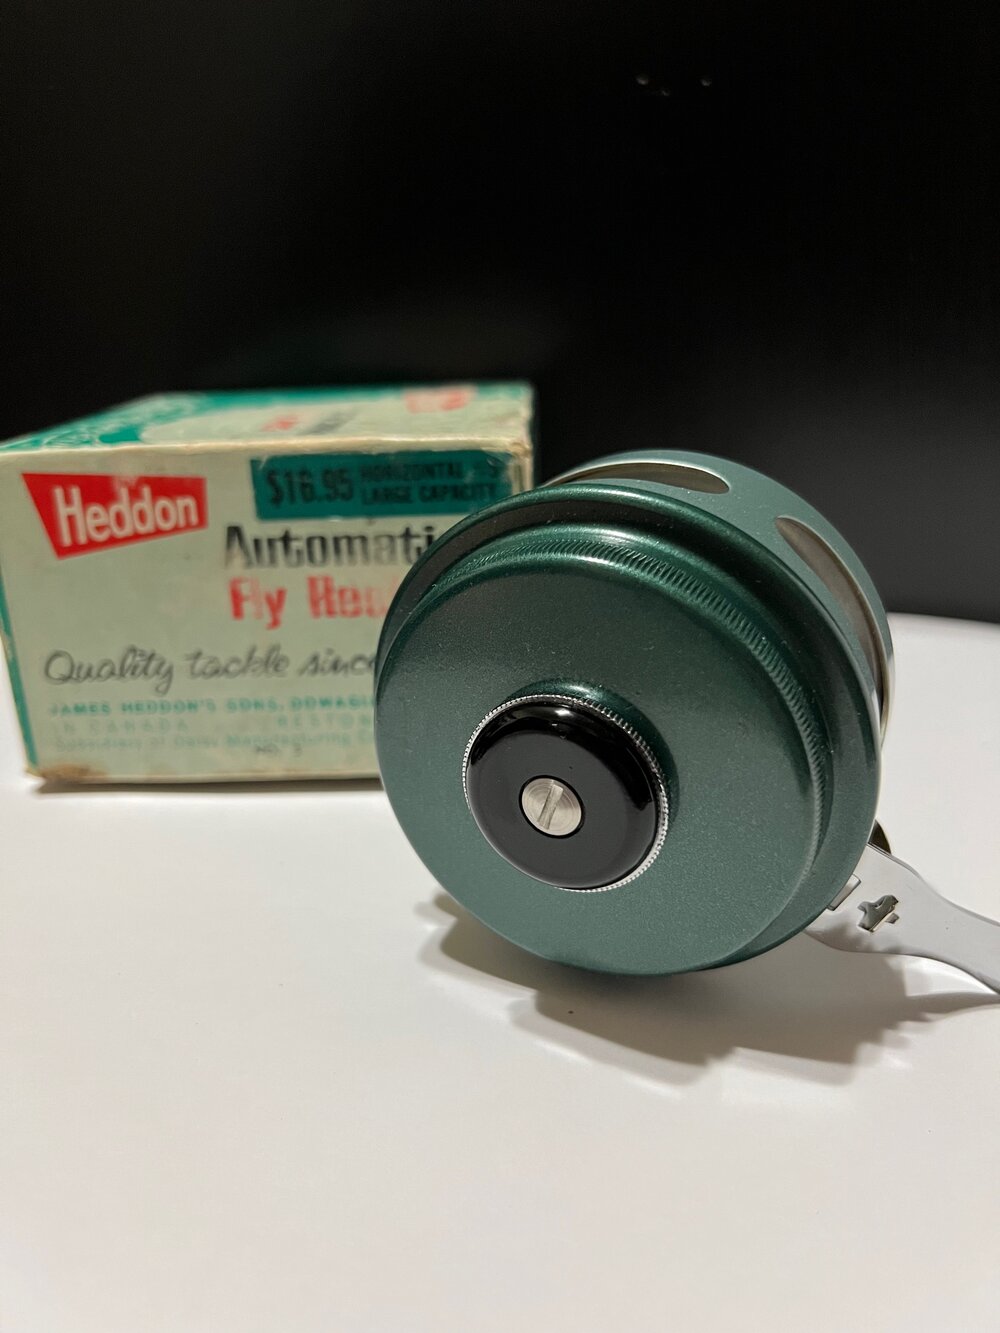 Heddon Model 5 Automatic Fly Fishing Reel With Original Box Circa